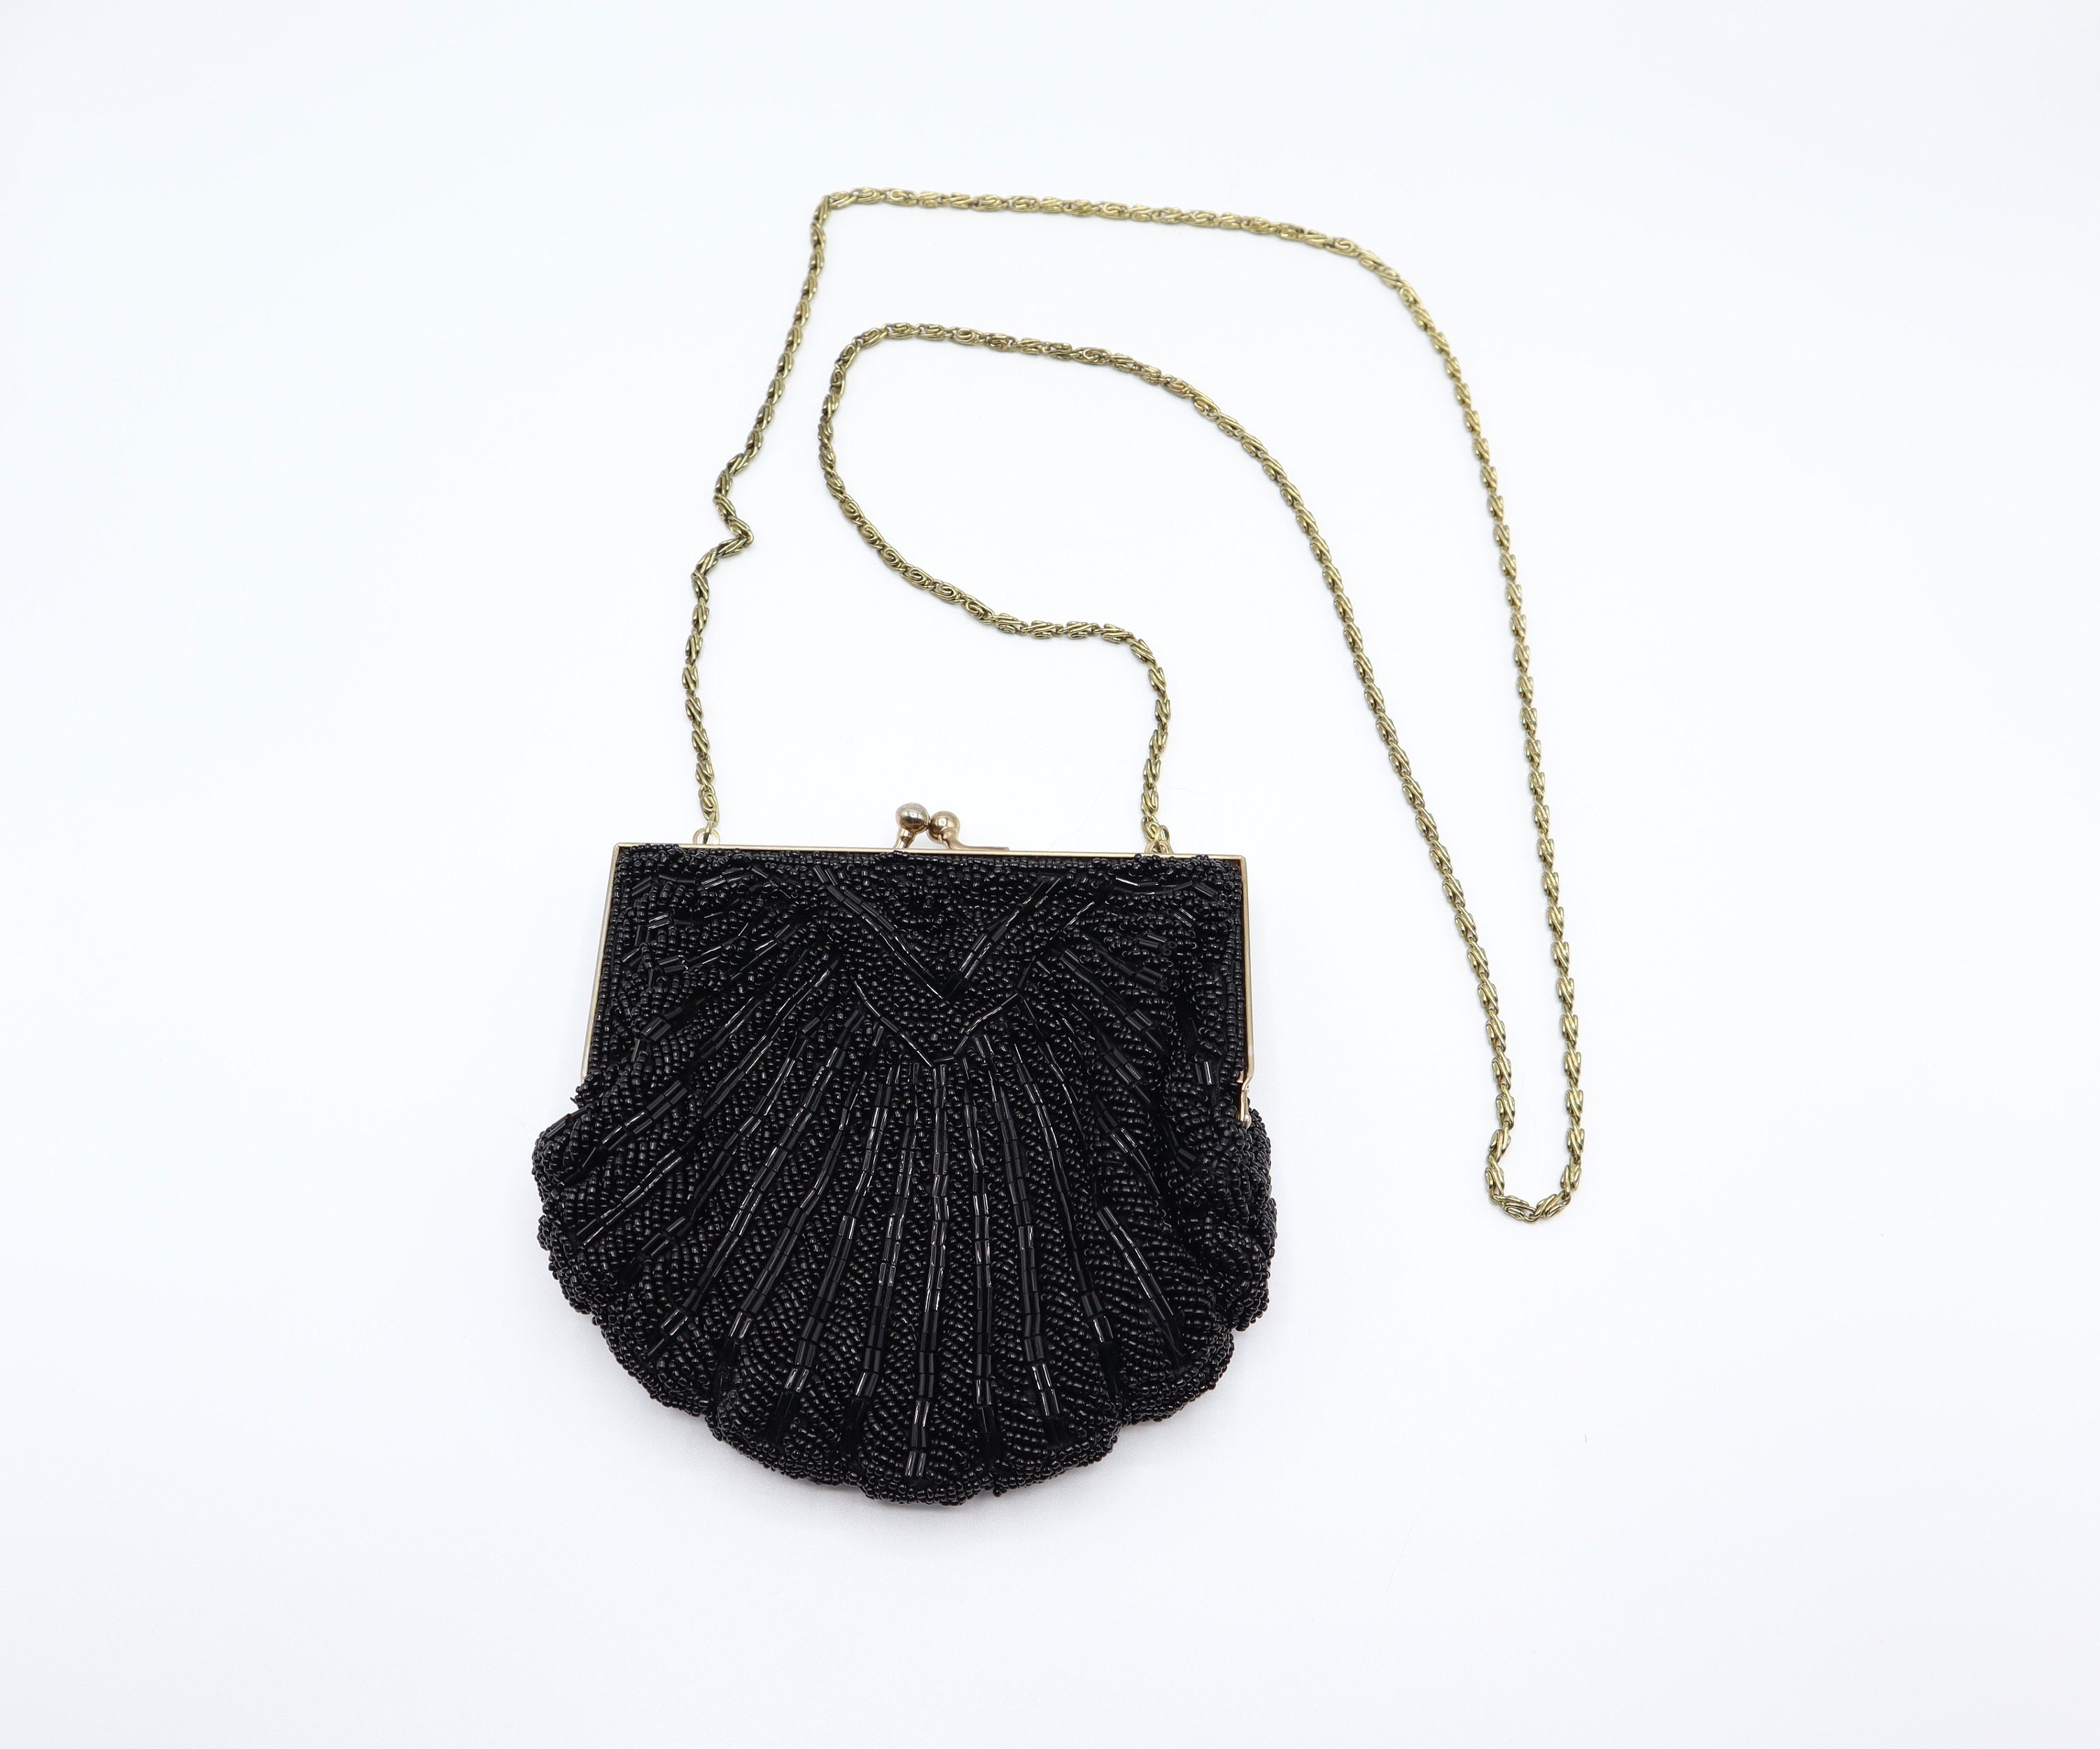 Vintage Magid Beaded Black Evening Bag / Purse hand made in Macau